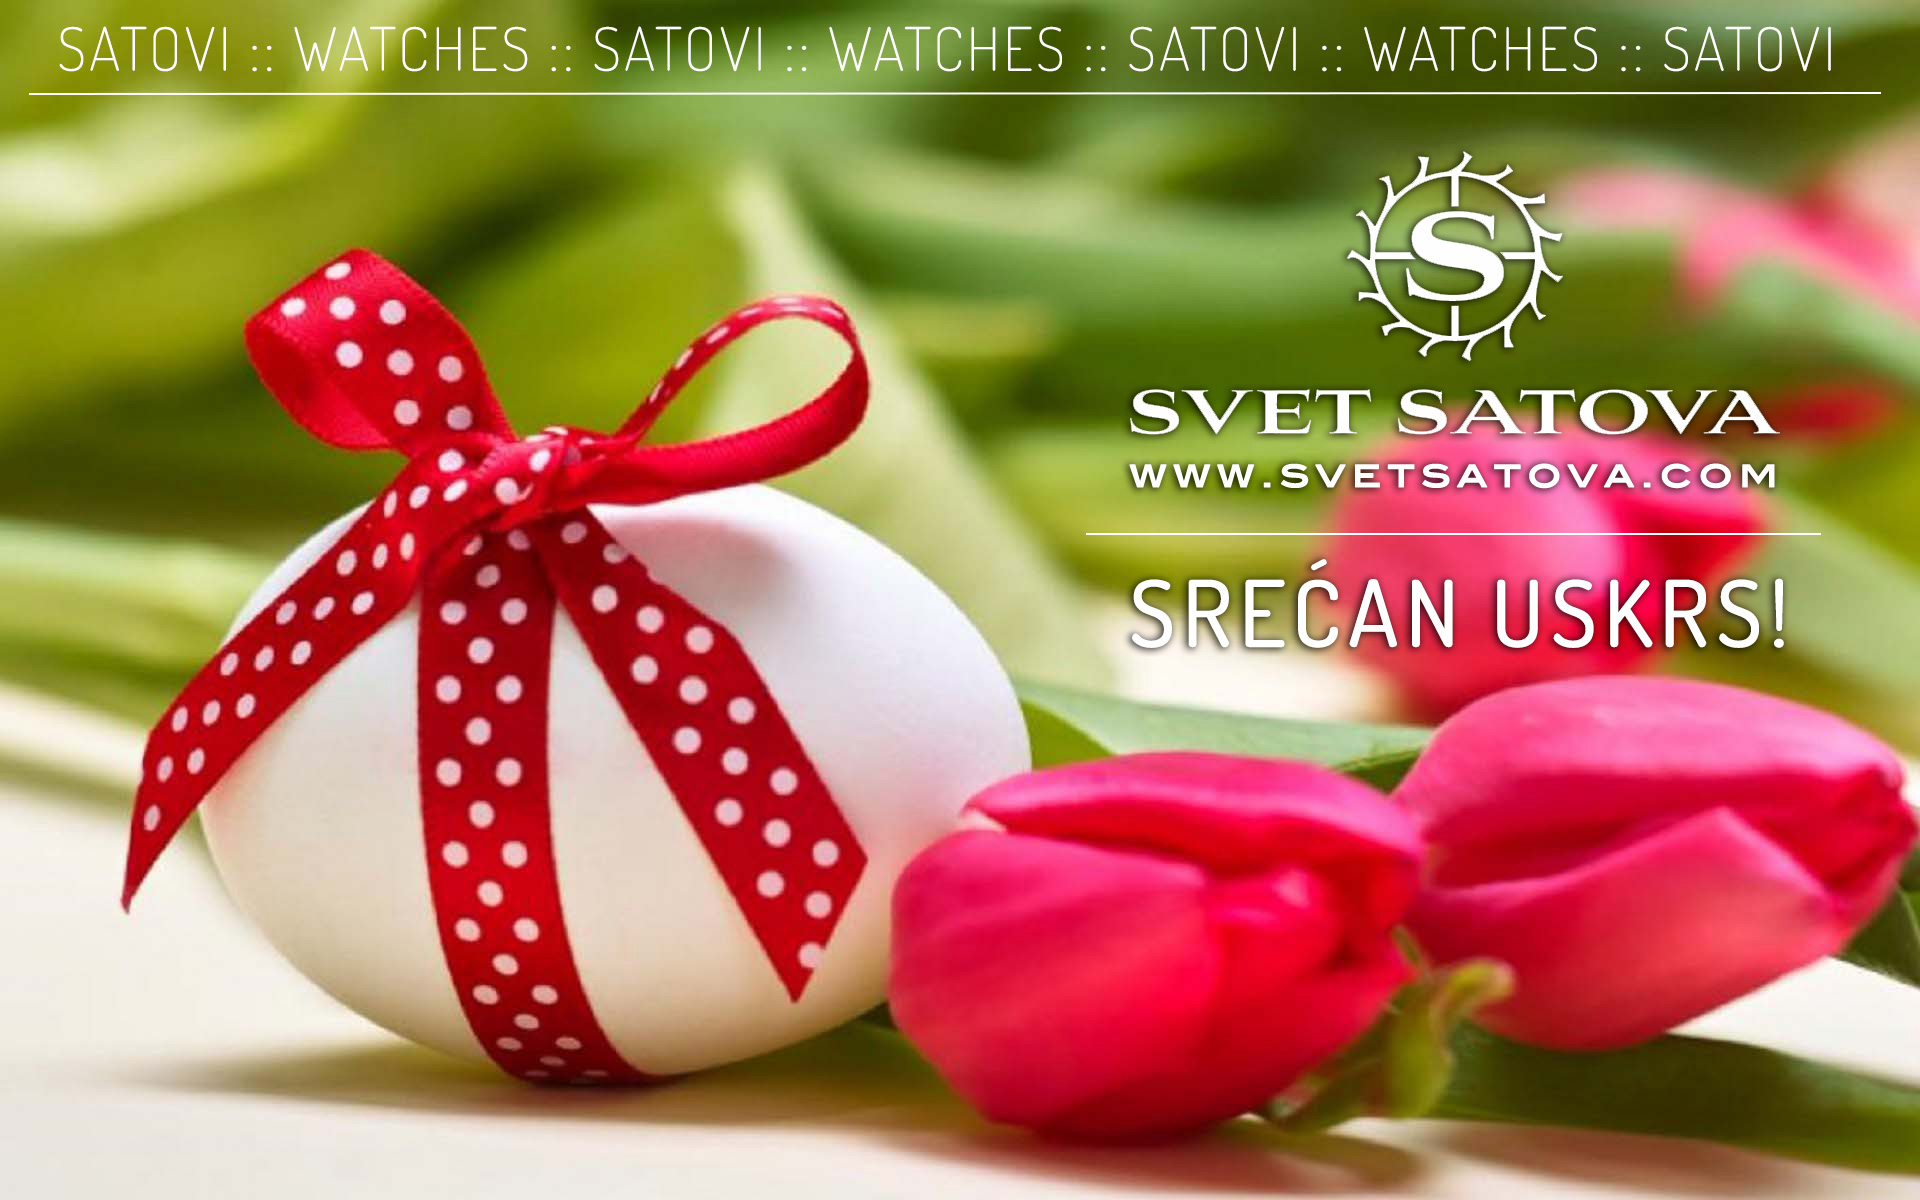 Naziv: Holidays-Easter-Egg-Svet-Satova-2015-1.jpg, pregleda: 278, veličina: 339,1 KB